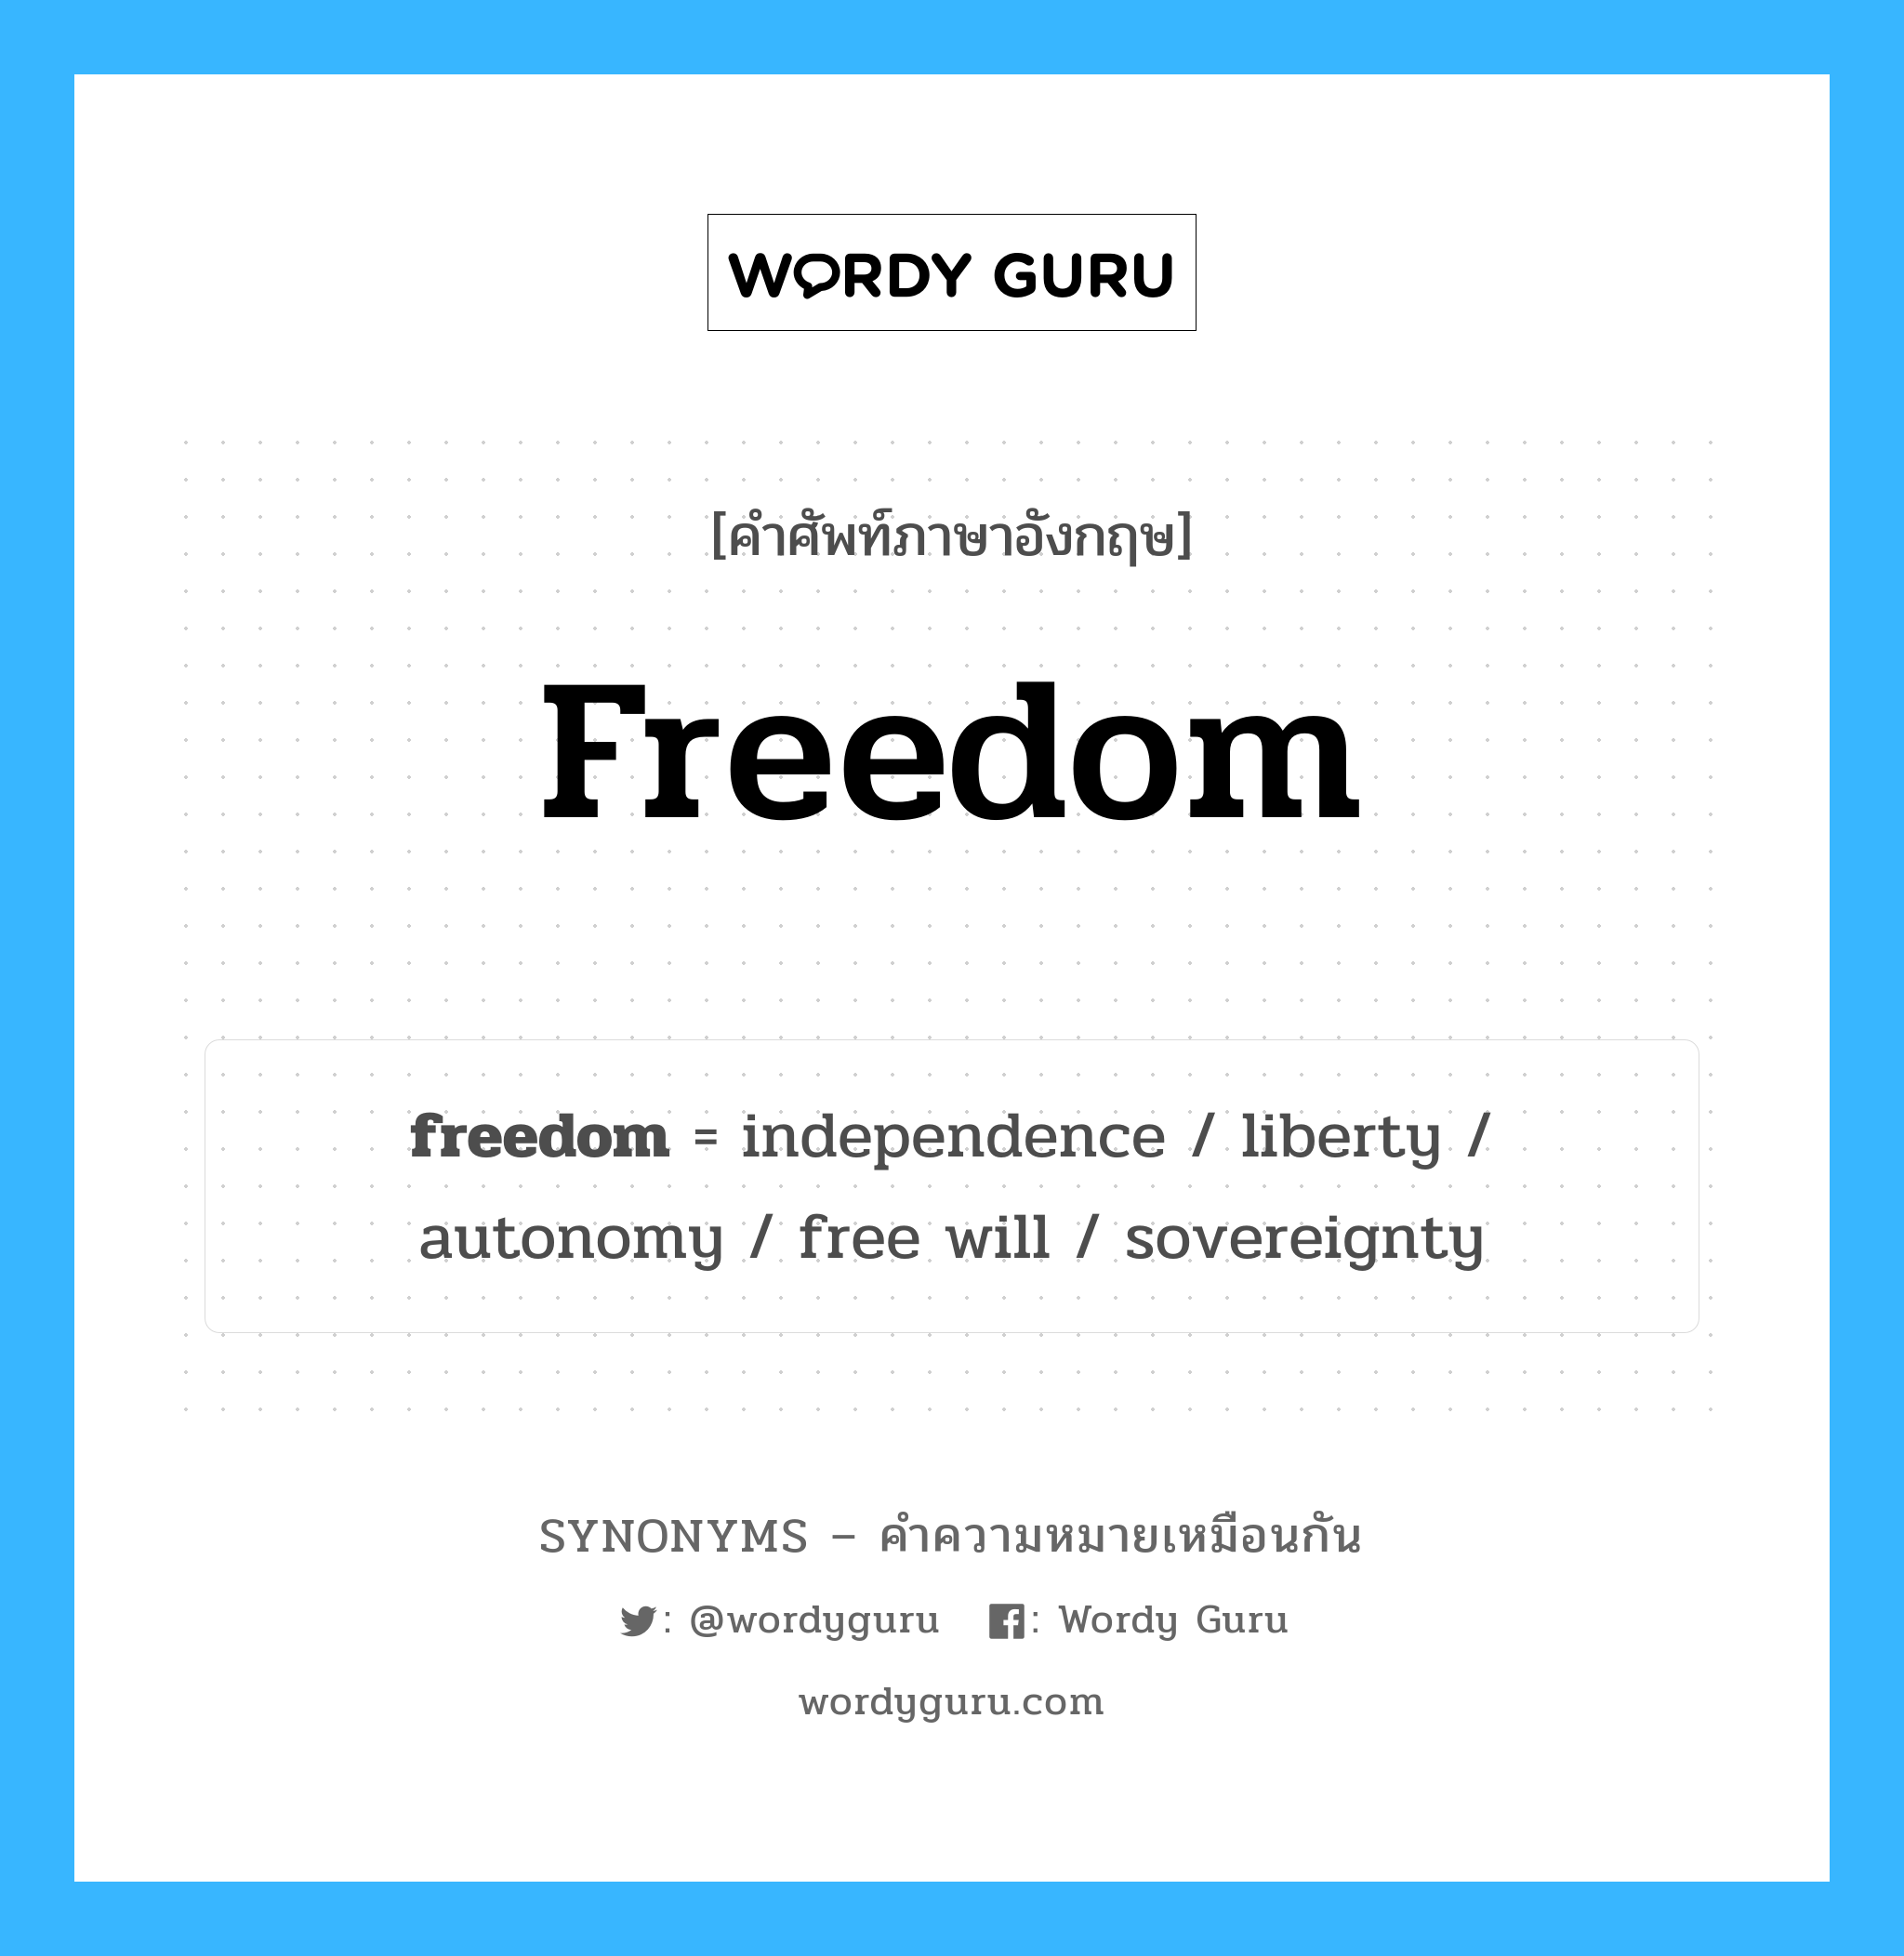 free will เป็นหนึ่งใน freedom และมีคำอื่น ๆ อีกดังนี้, คำศัพท์ภาษาอังกฤษ free will ความหมายคล้ายกันกับ freedom แปลว่า จะฟรี หมวด freedom